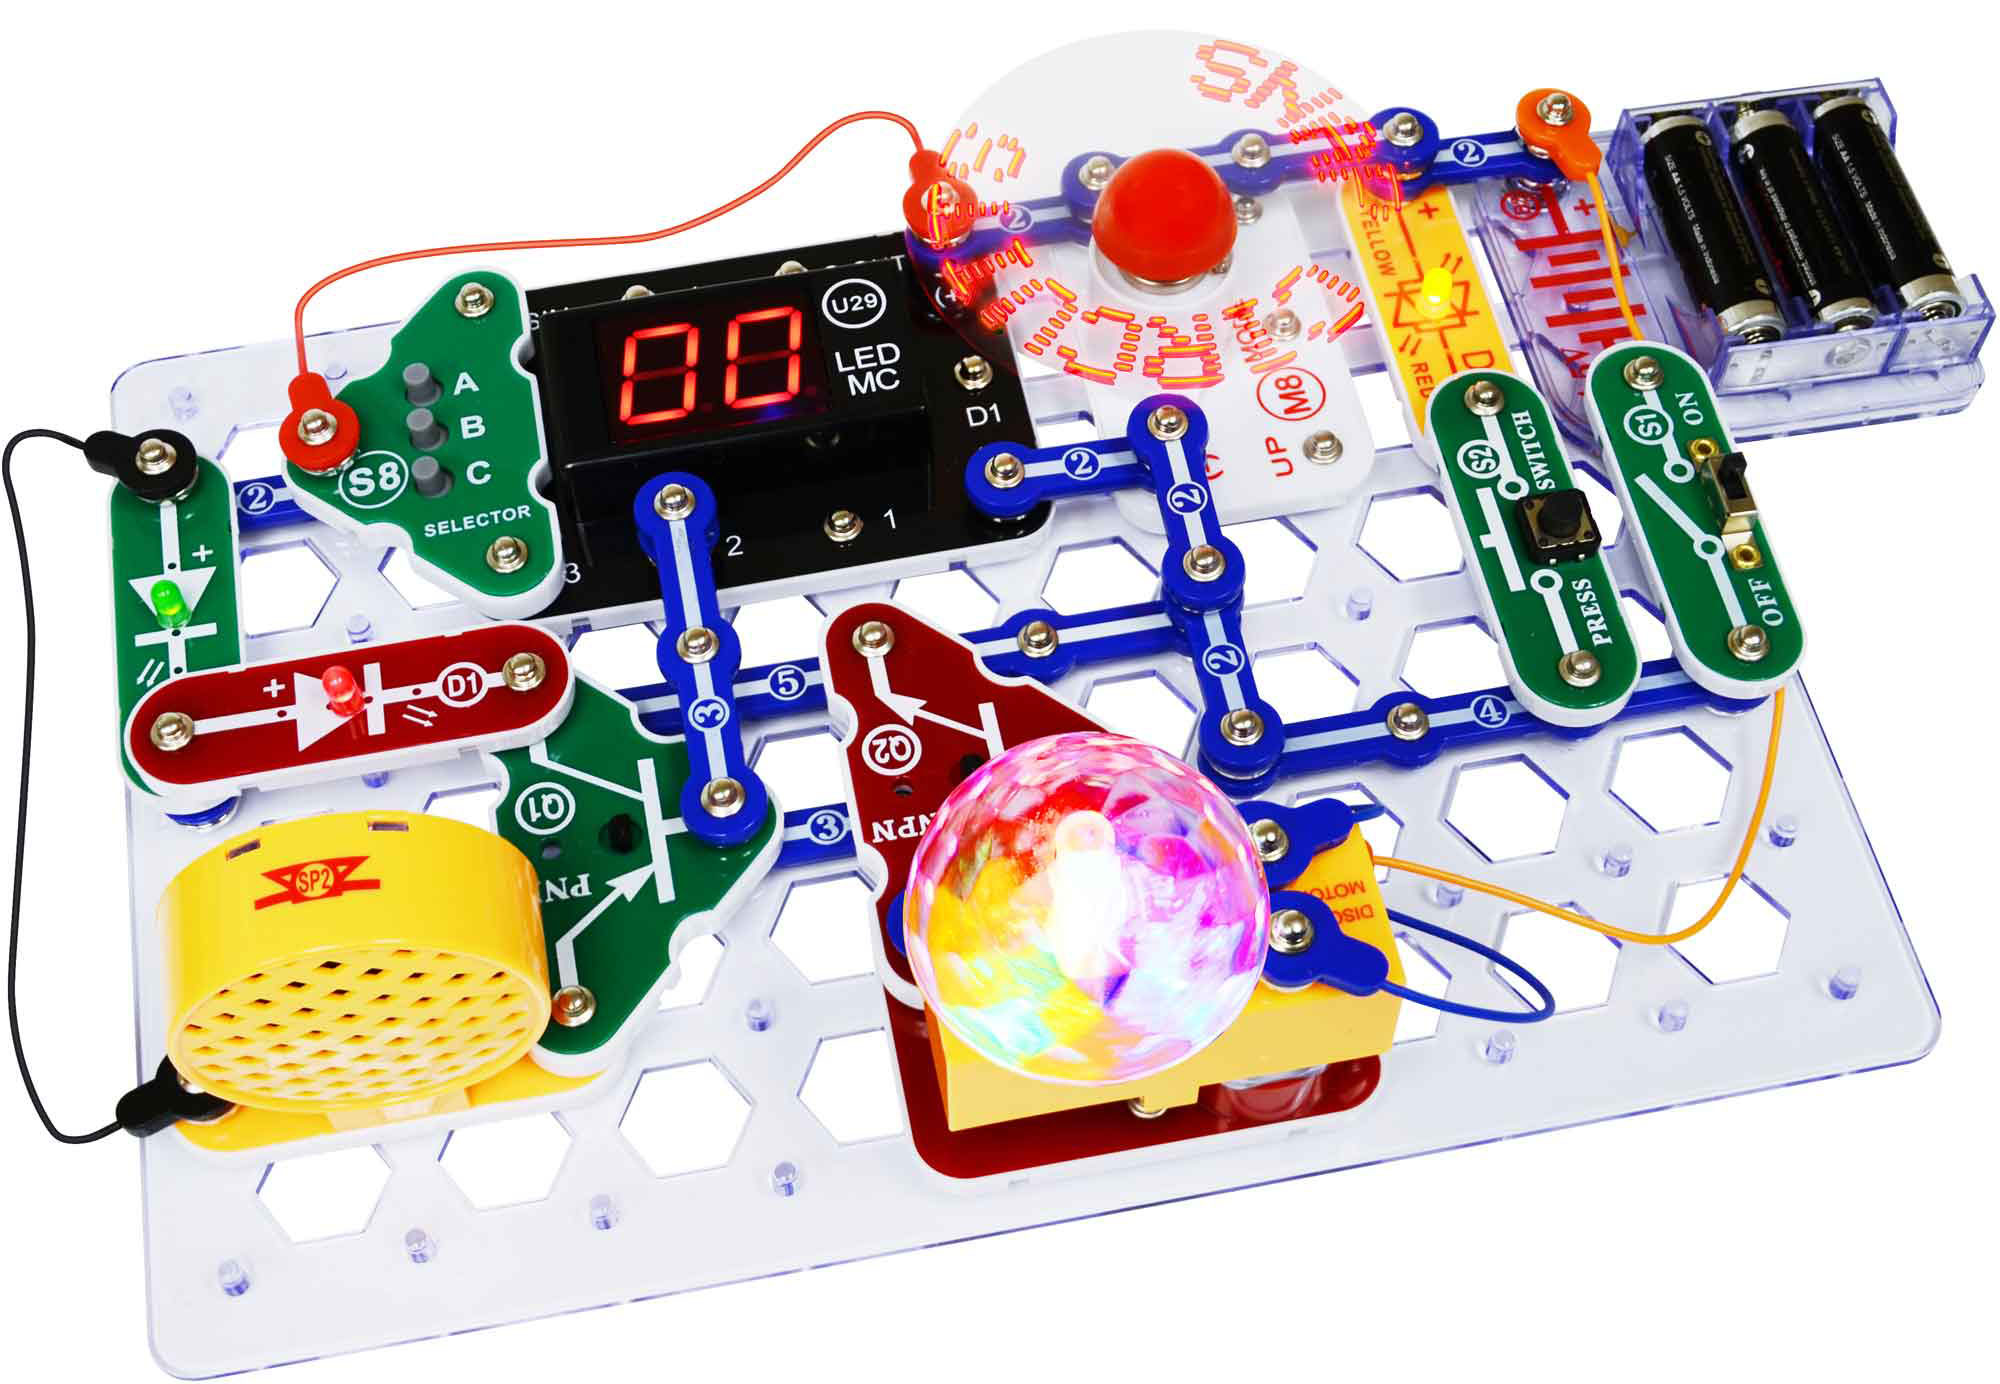 Equipo de experimentos Snap Circuits Arcade - Haz clic para ampliar